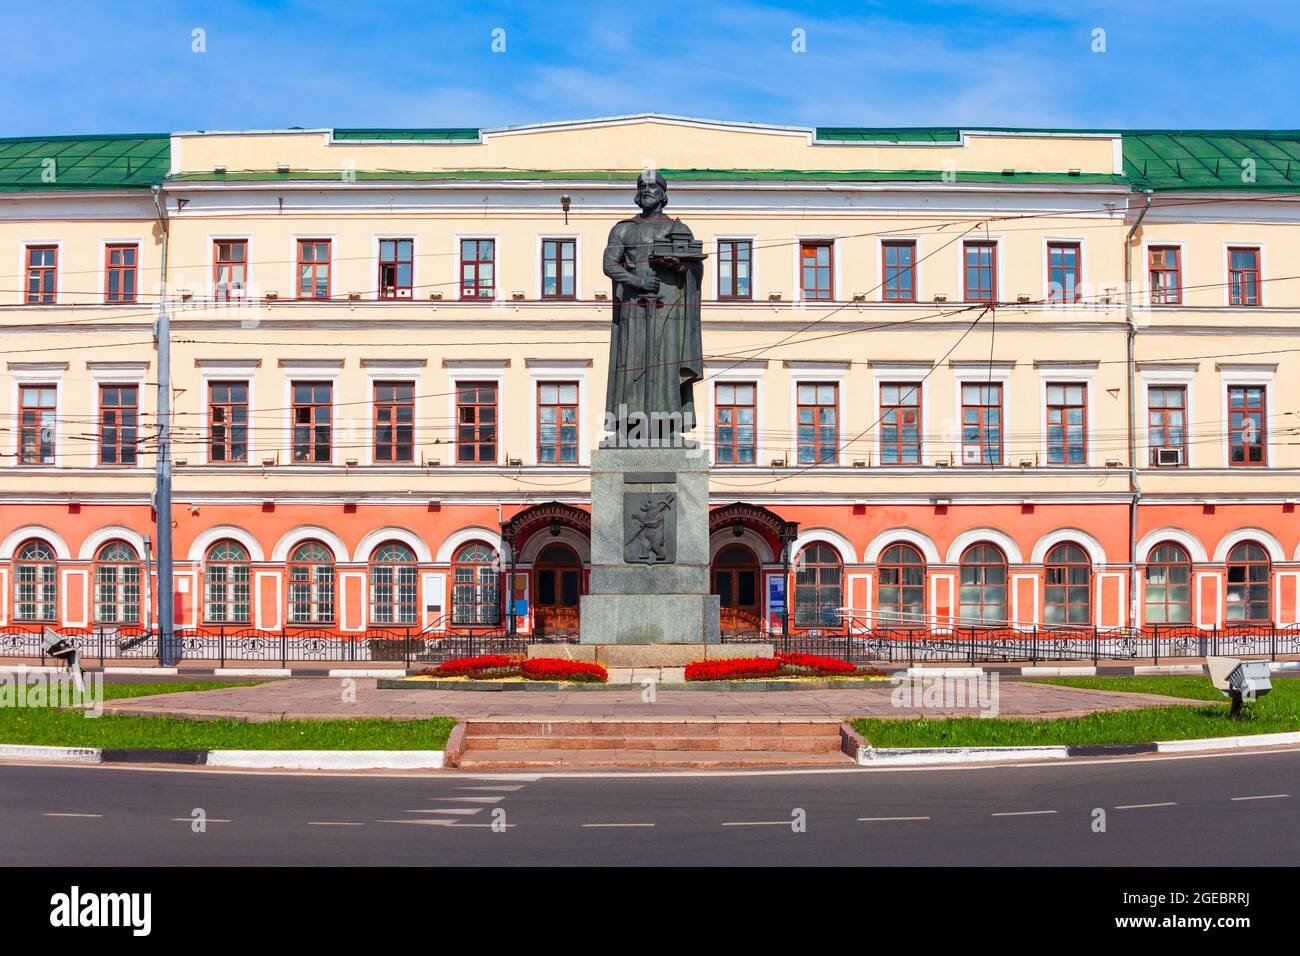 YAROSLAVL, RUSSIE - 05 AOÛT 2020 : Yaroslav la statue de Sage dans la ville de Yaroslavl, anneau d'or de Russie. Yaroslav était le grand prince de Veliky Novgorod A. Banque D'Images